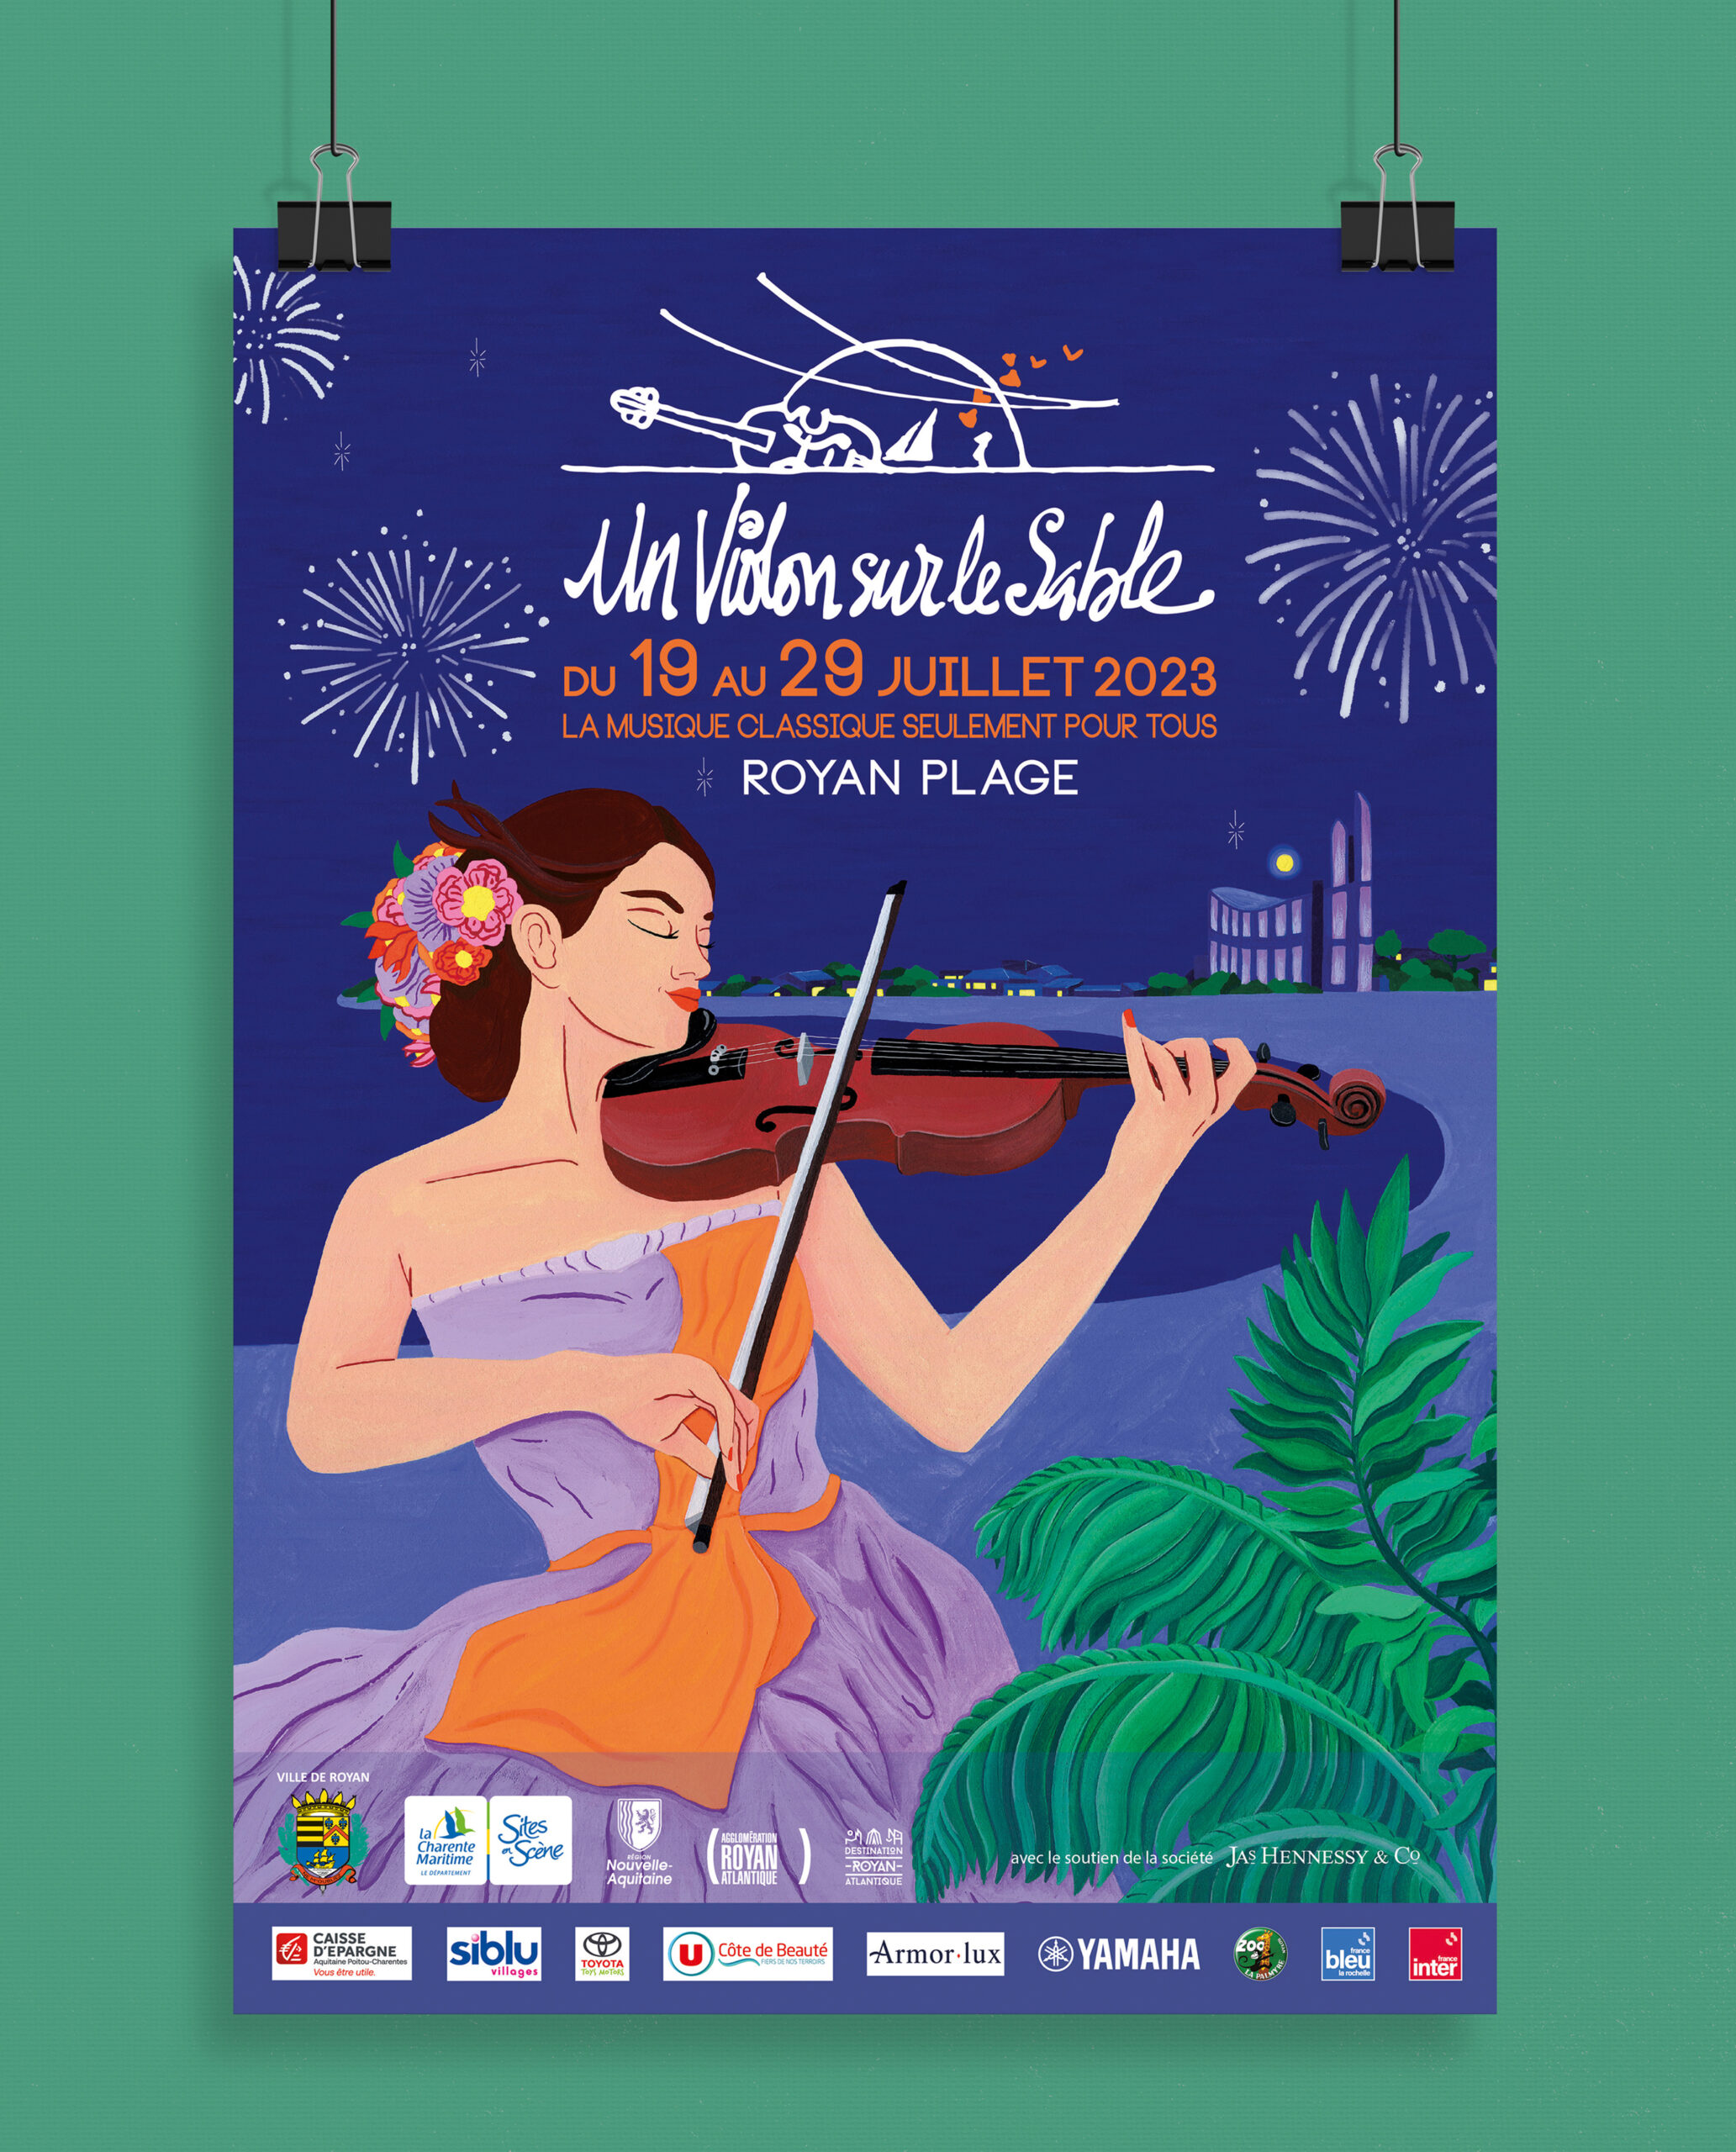 Marie Pellet - Illustration - graphic design - portfolio - Festival - summer 2023 - Musique - Classic music - Royan - plage - Charente maritime - Affiche